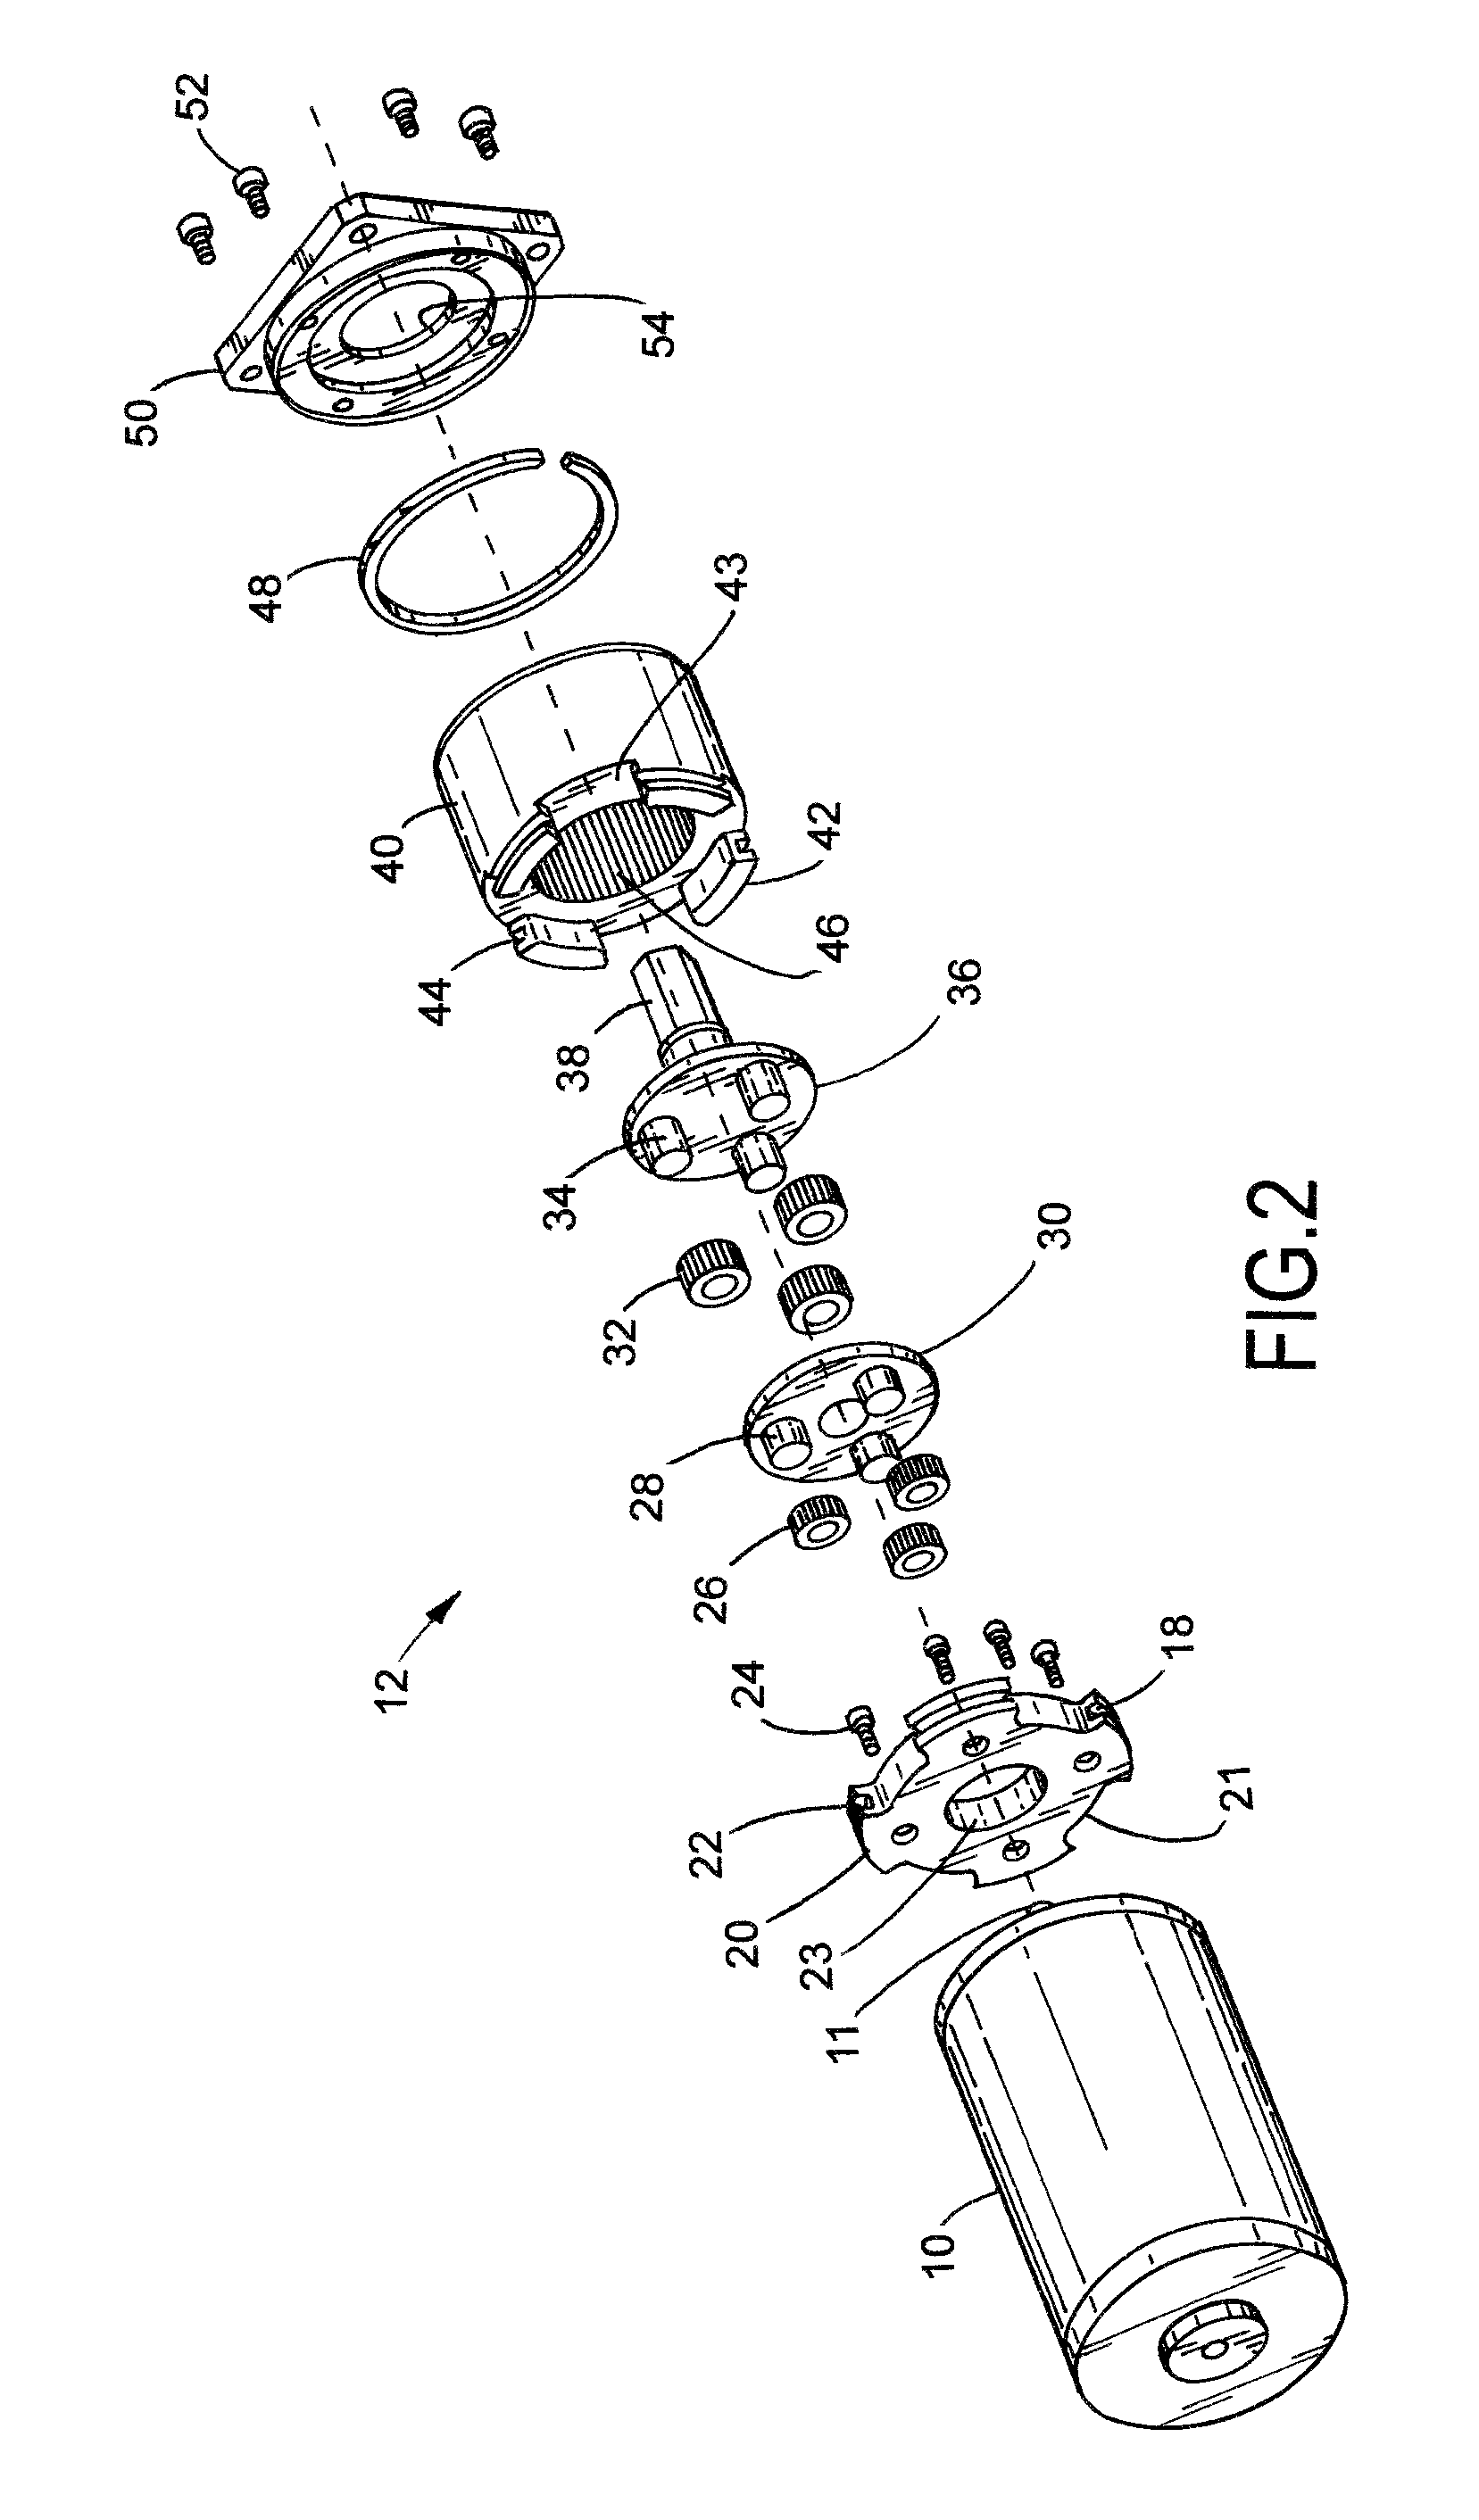 Floating ring gear epicyclic gear system